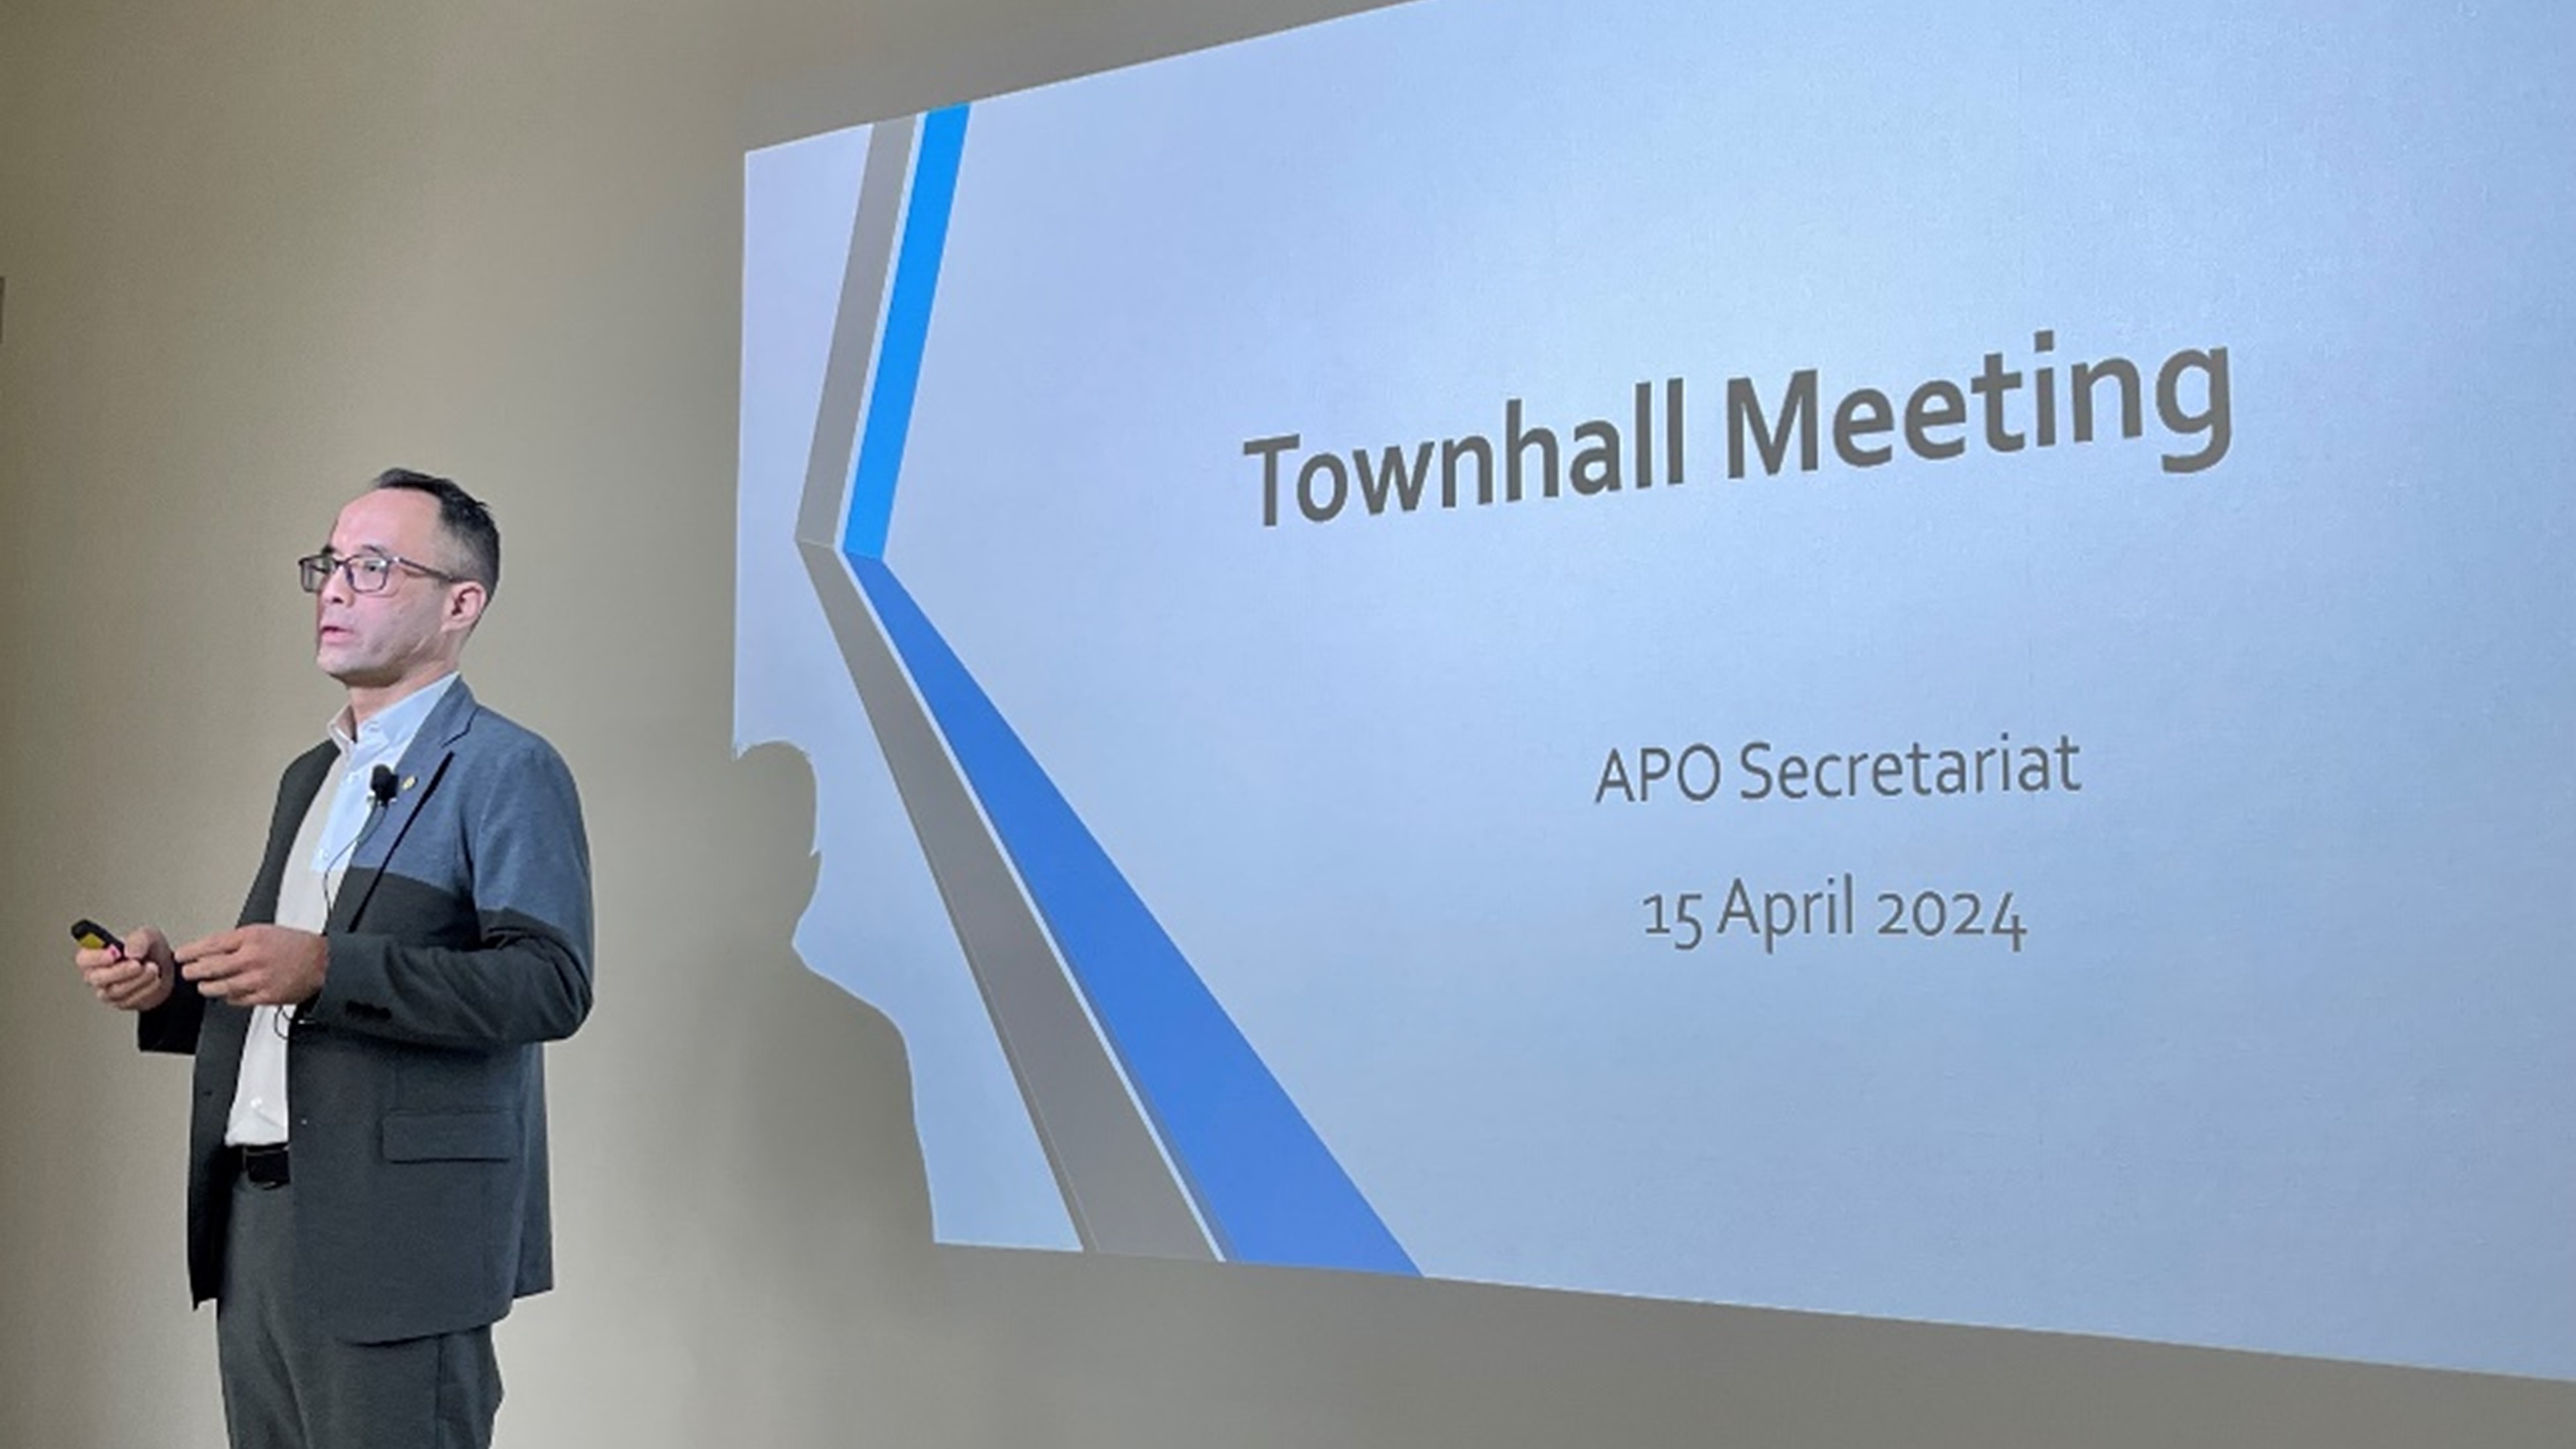 Strategic reflections at APO Secretariat townhall meeting